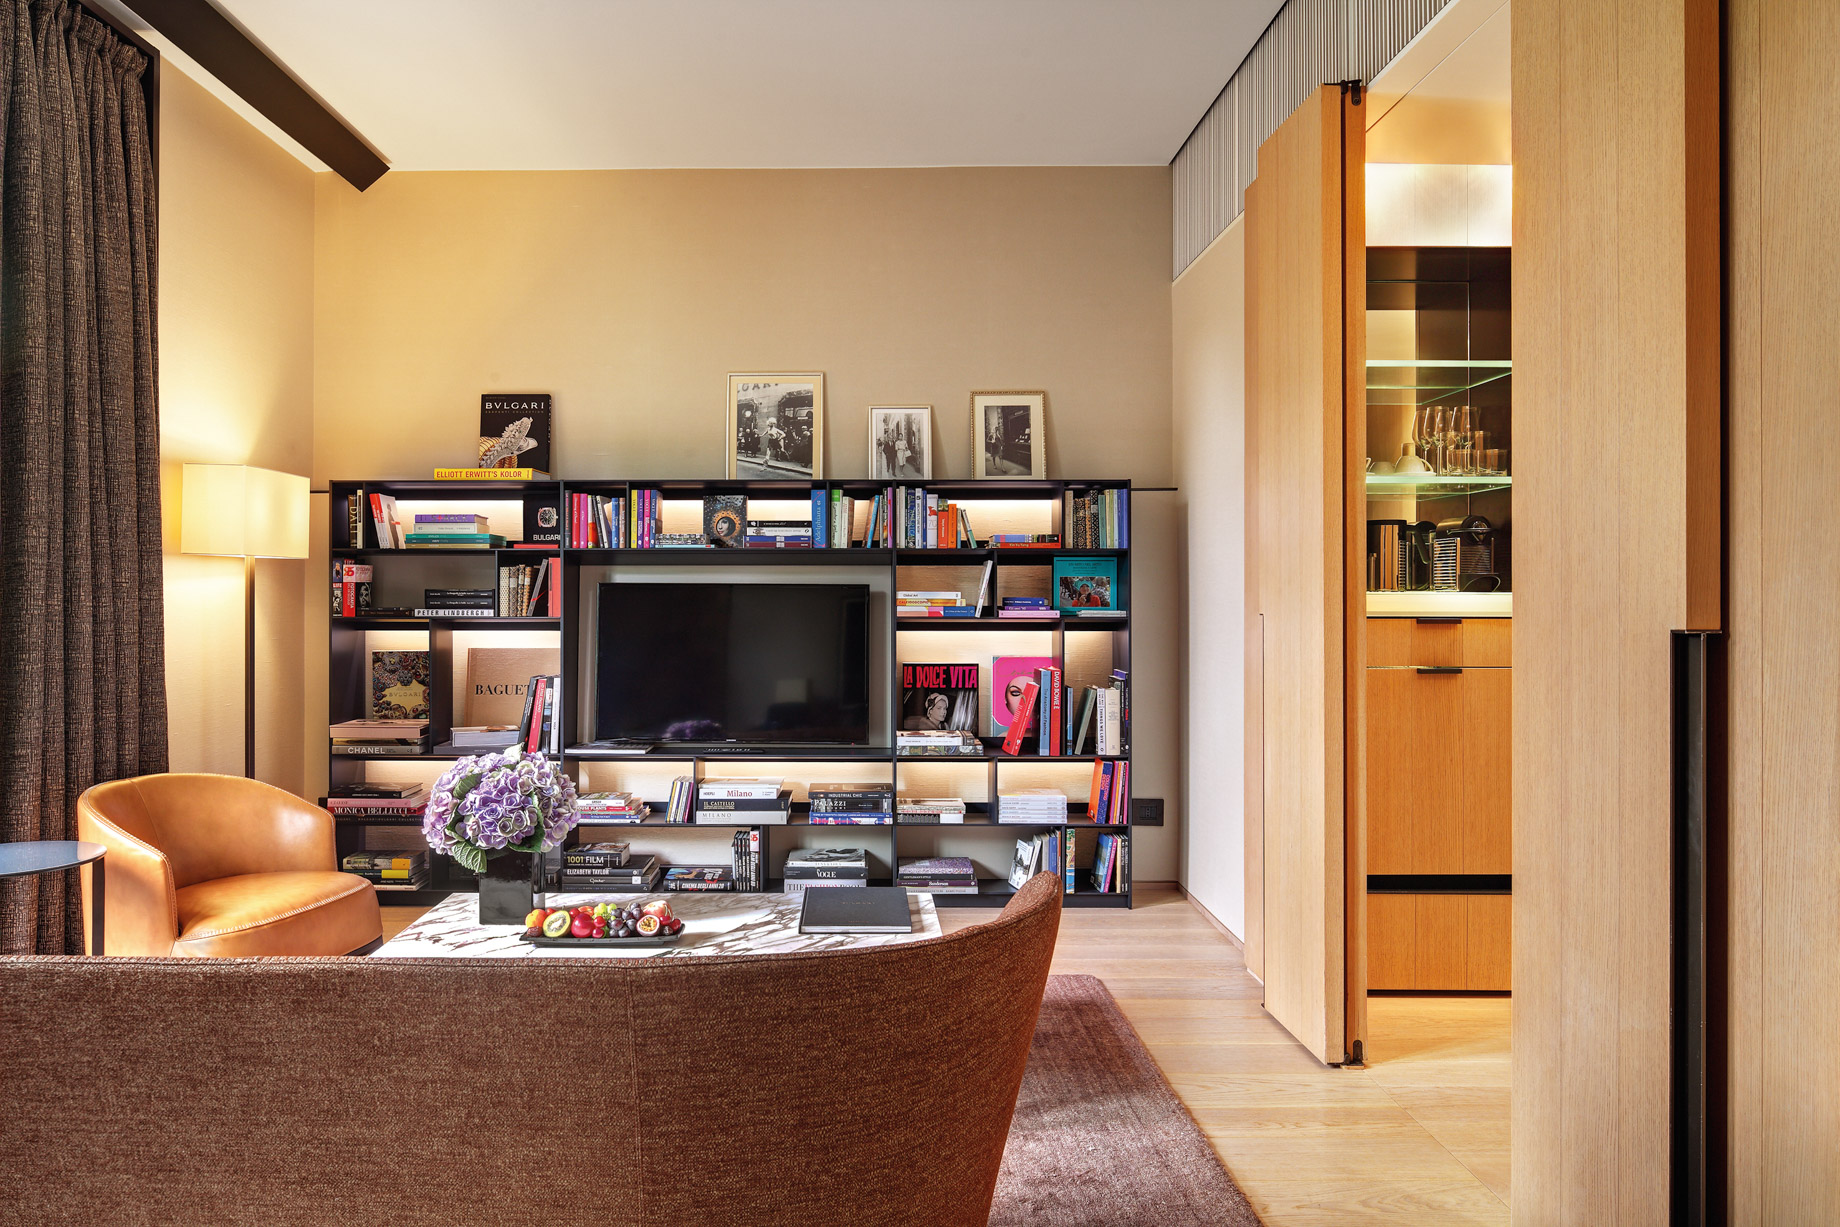 Bvlgari Hotel Milano – Milan, Italy – Guest Suite Living Room